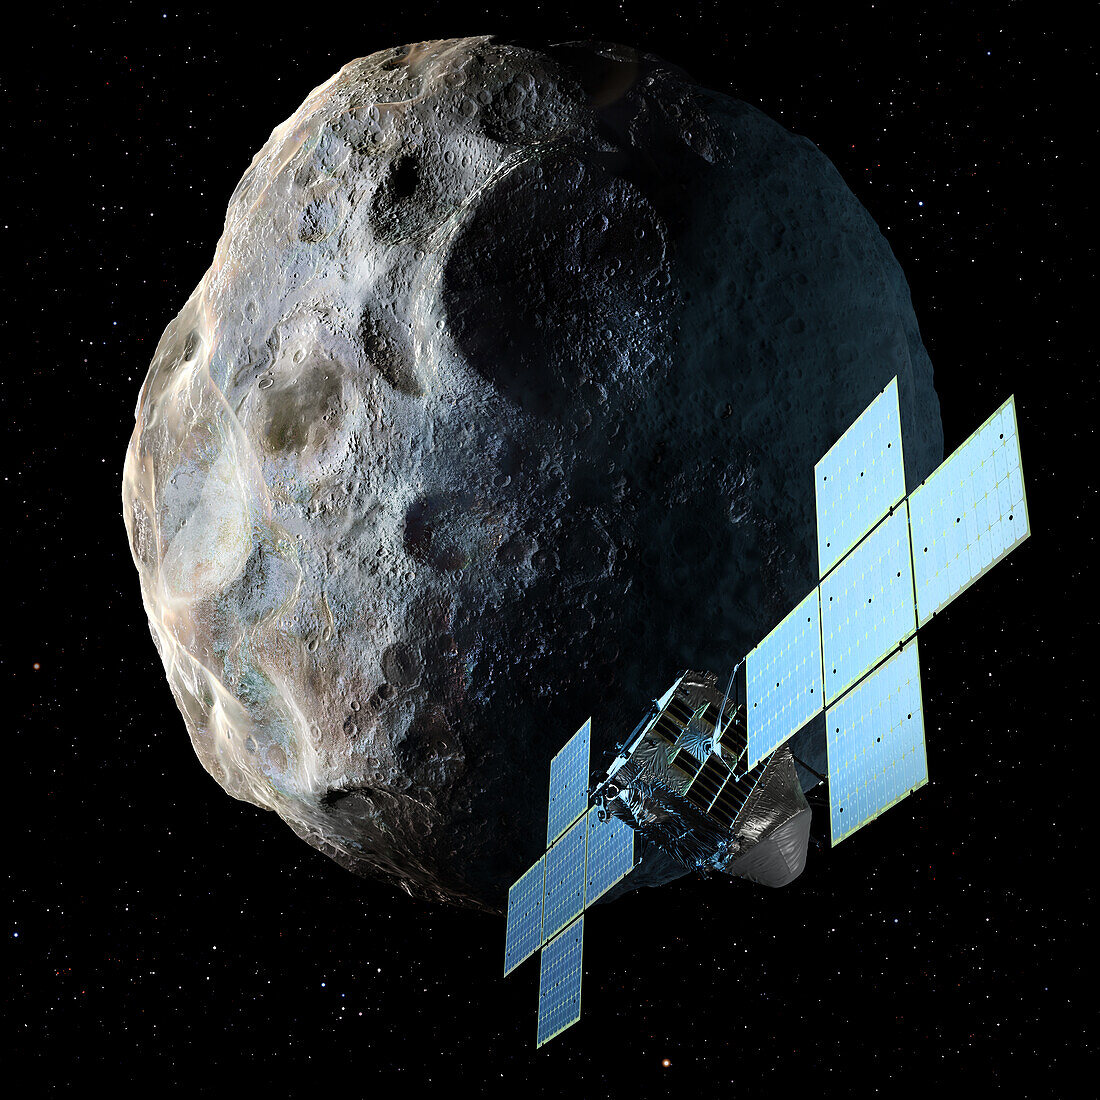 Psyche asteroid mission, illustration